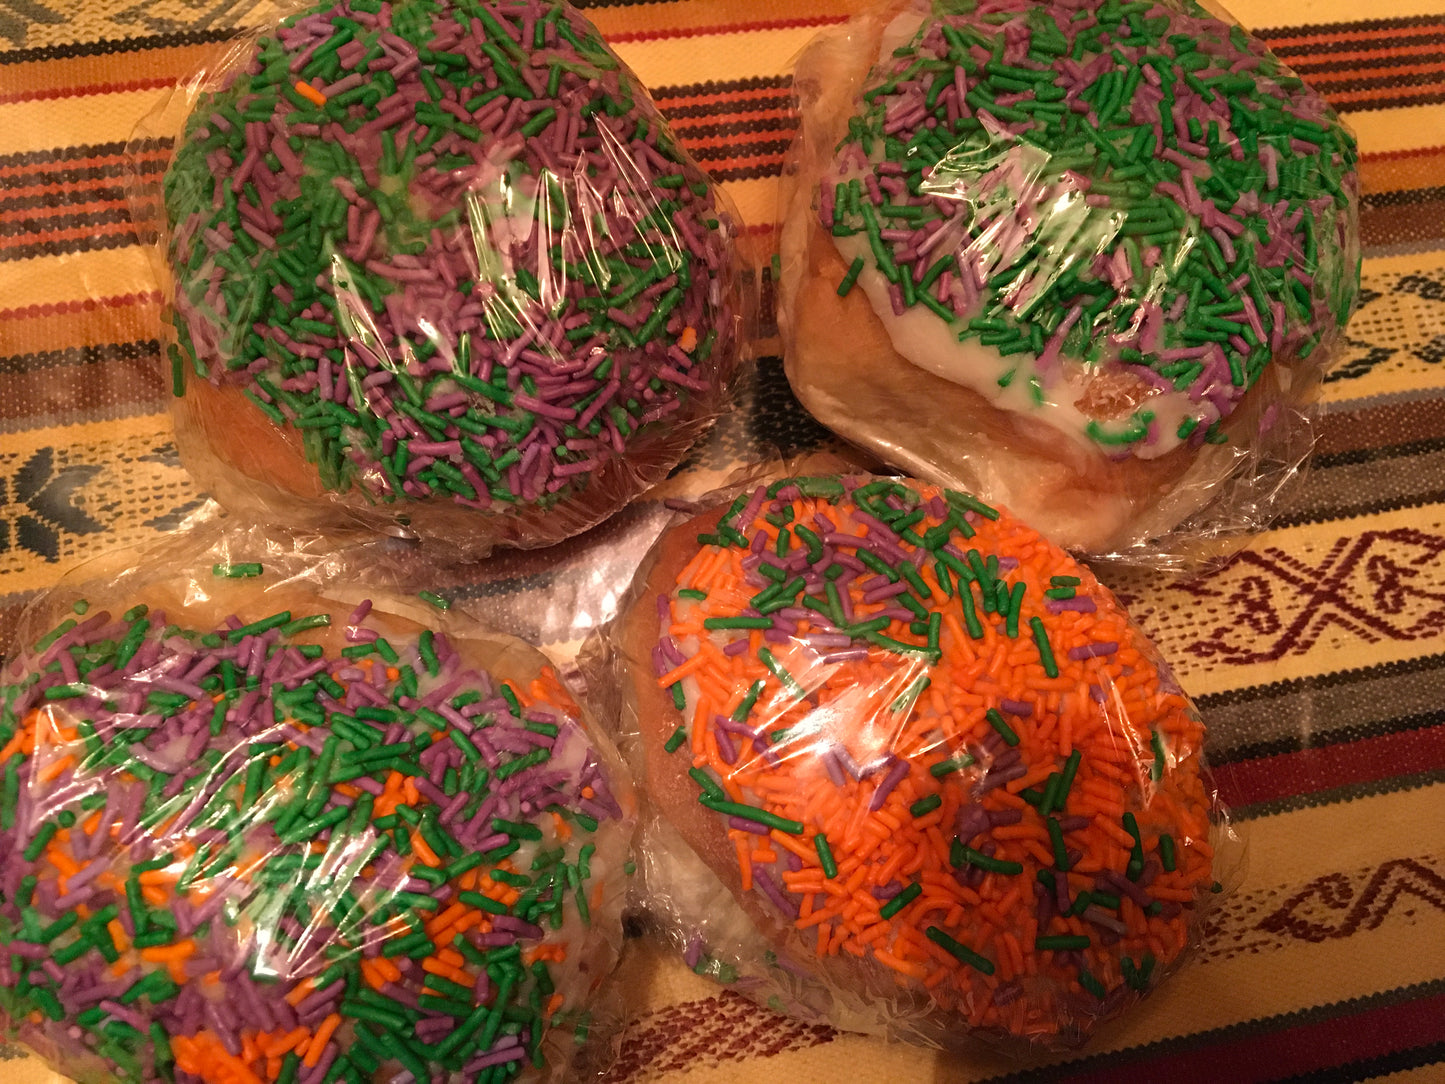 Halloween sprinkled sweet buns